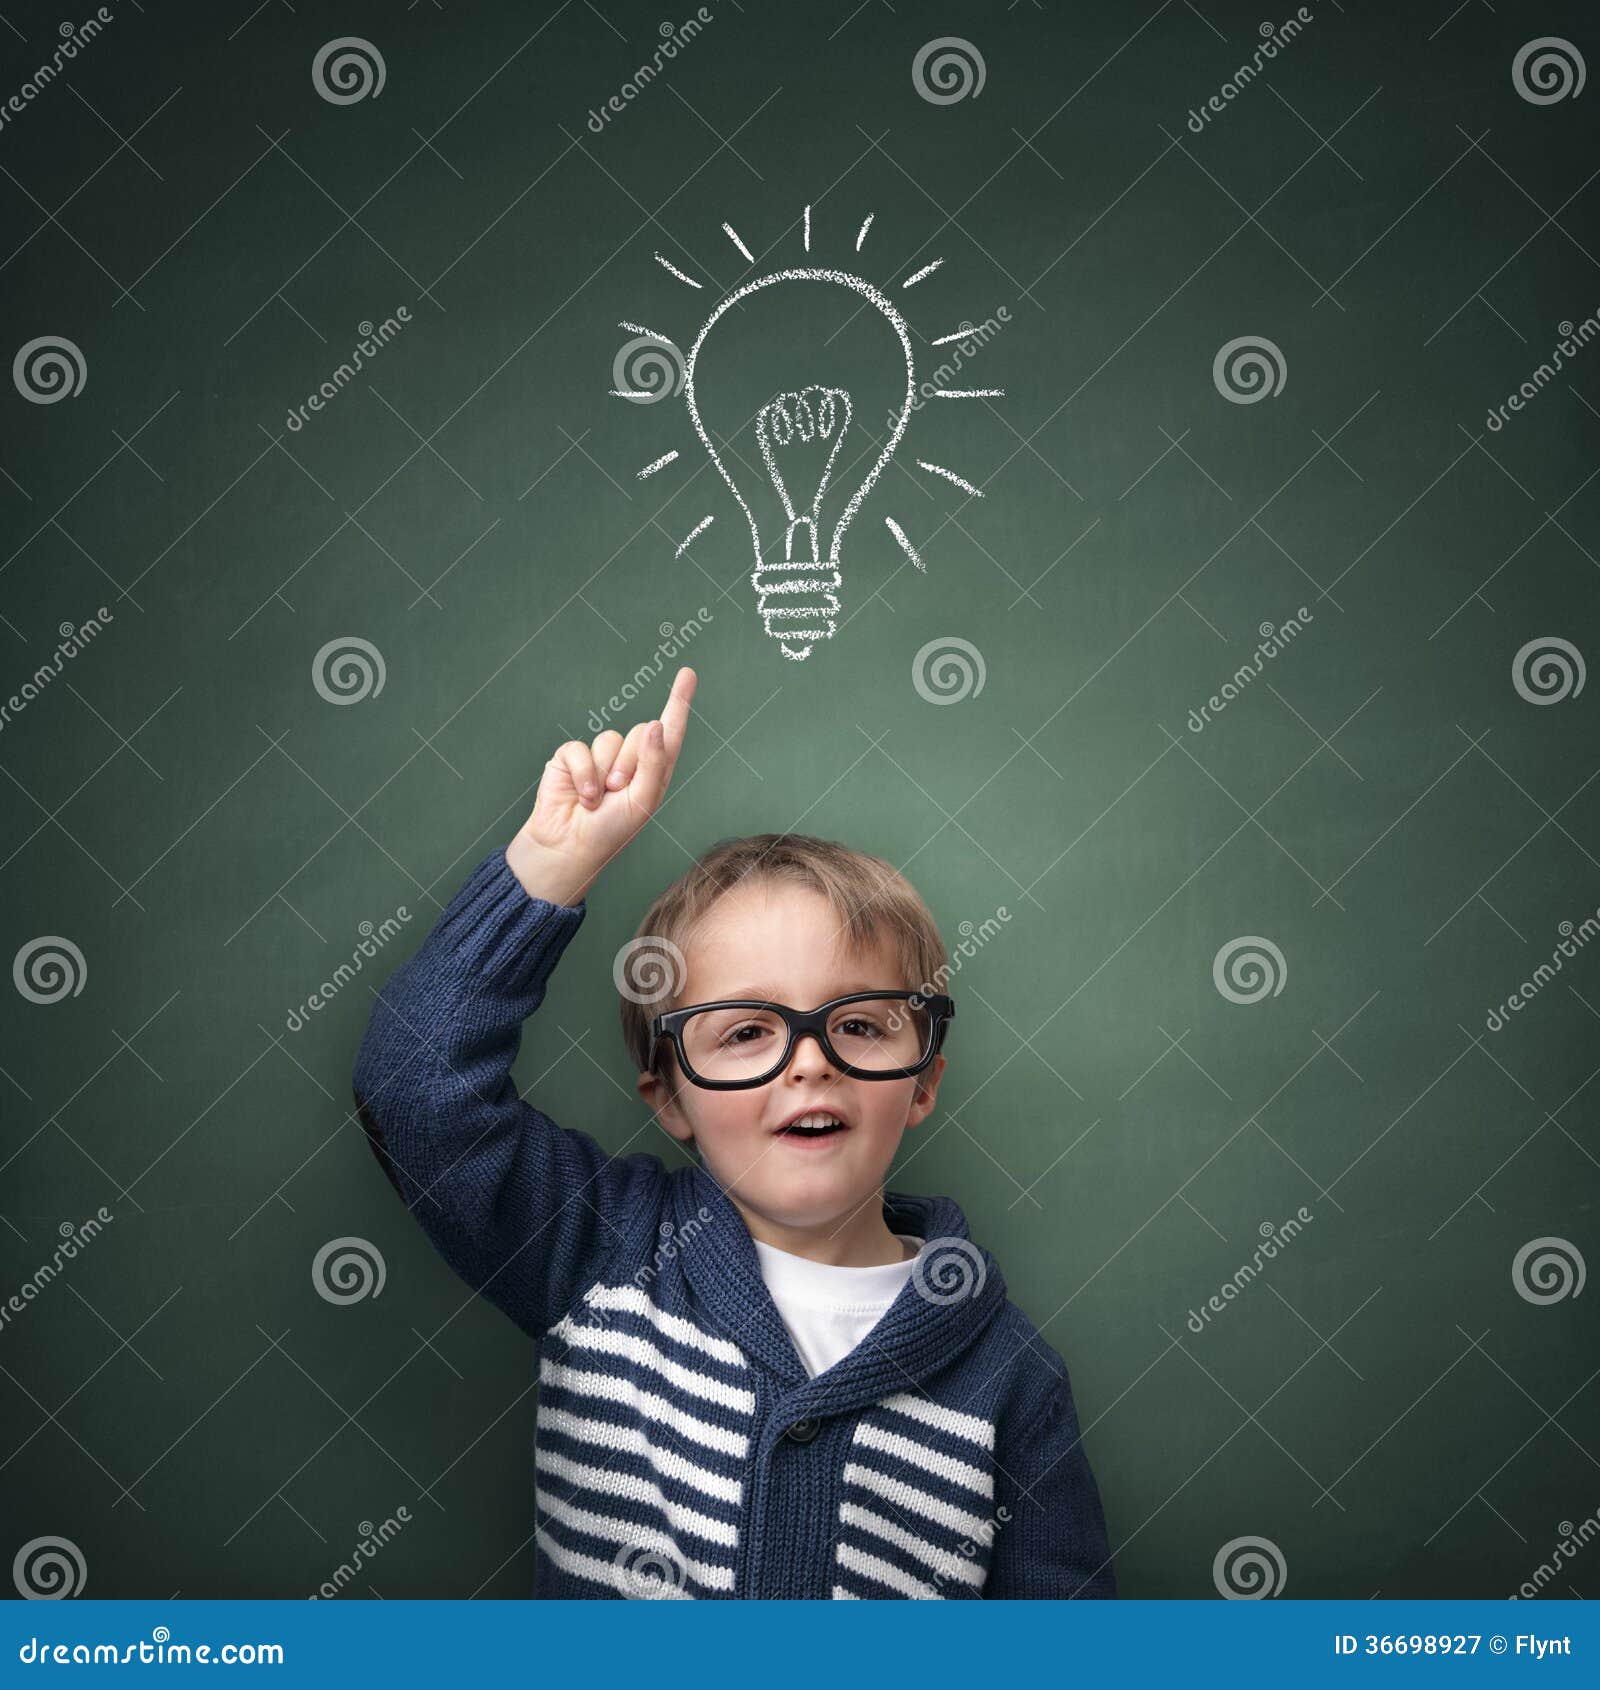 inspirational-idea-schoolboy-standing-front-blackboard-bright-light-bulb-above-his-head-concept-innovation-36698927.jpg